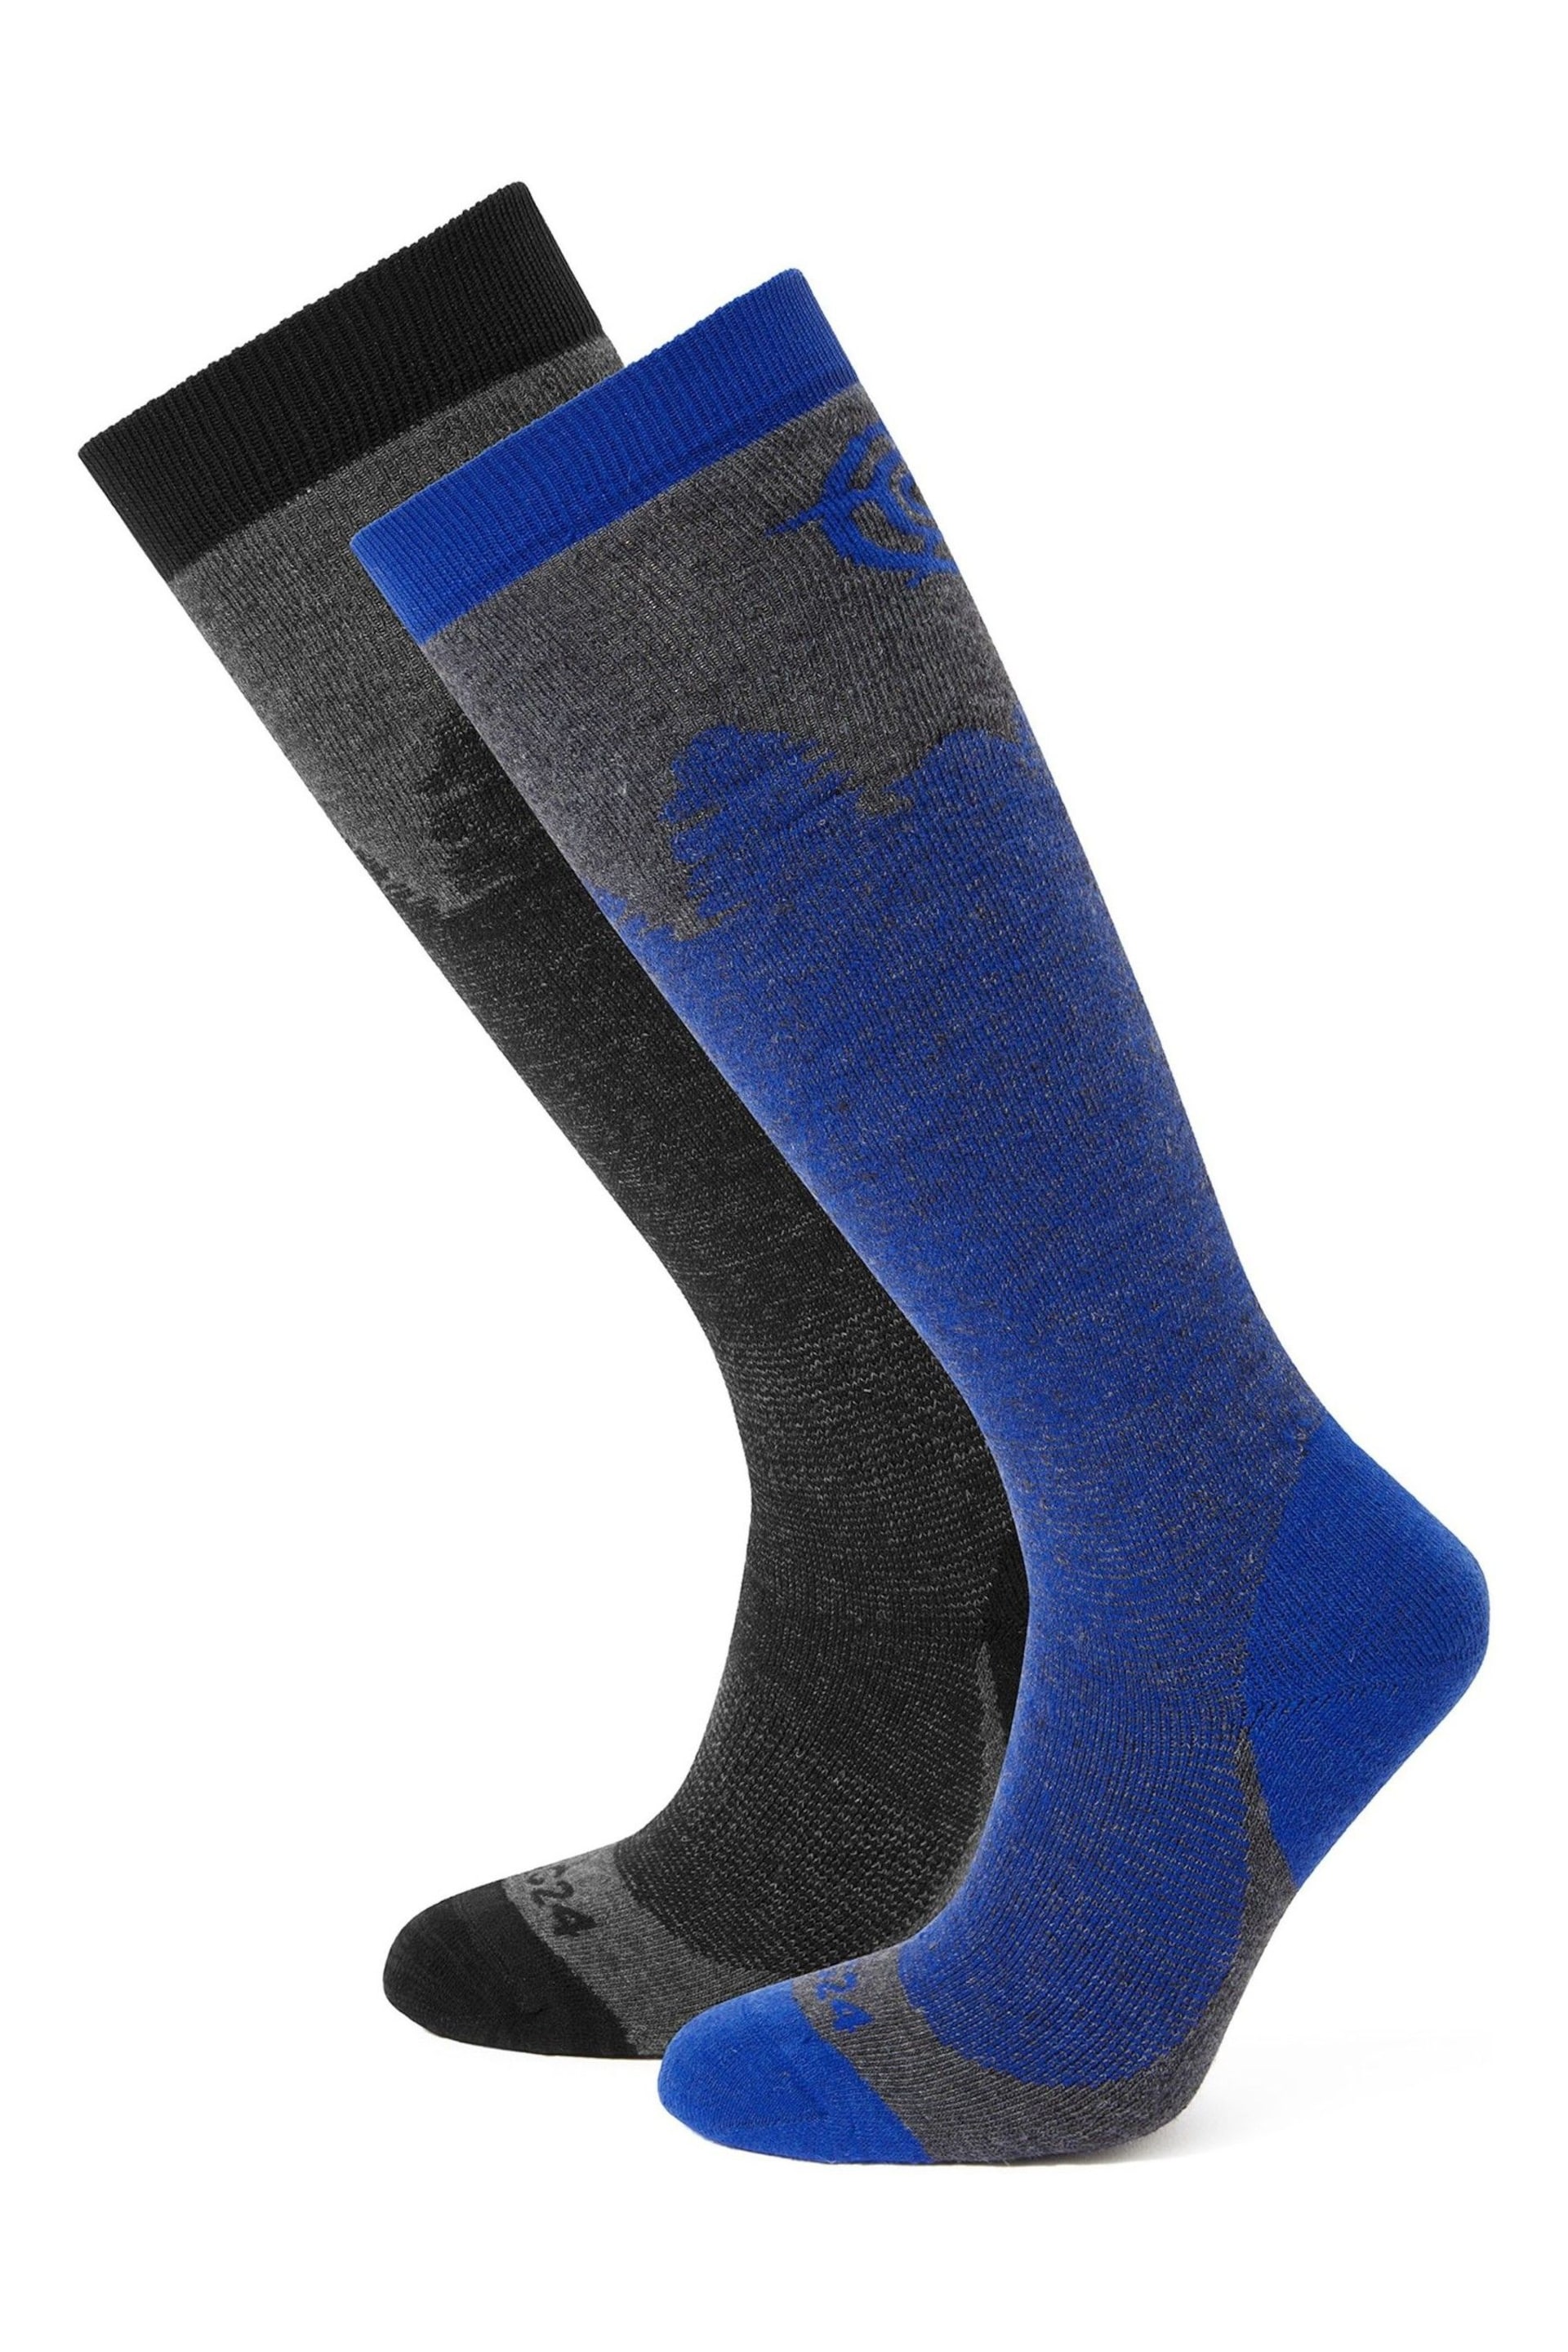 Tog 24 Blue Aprica Ski Socks 2 Packs - Image 1 of 2